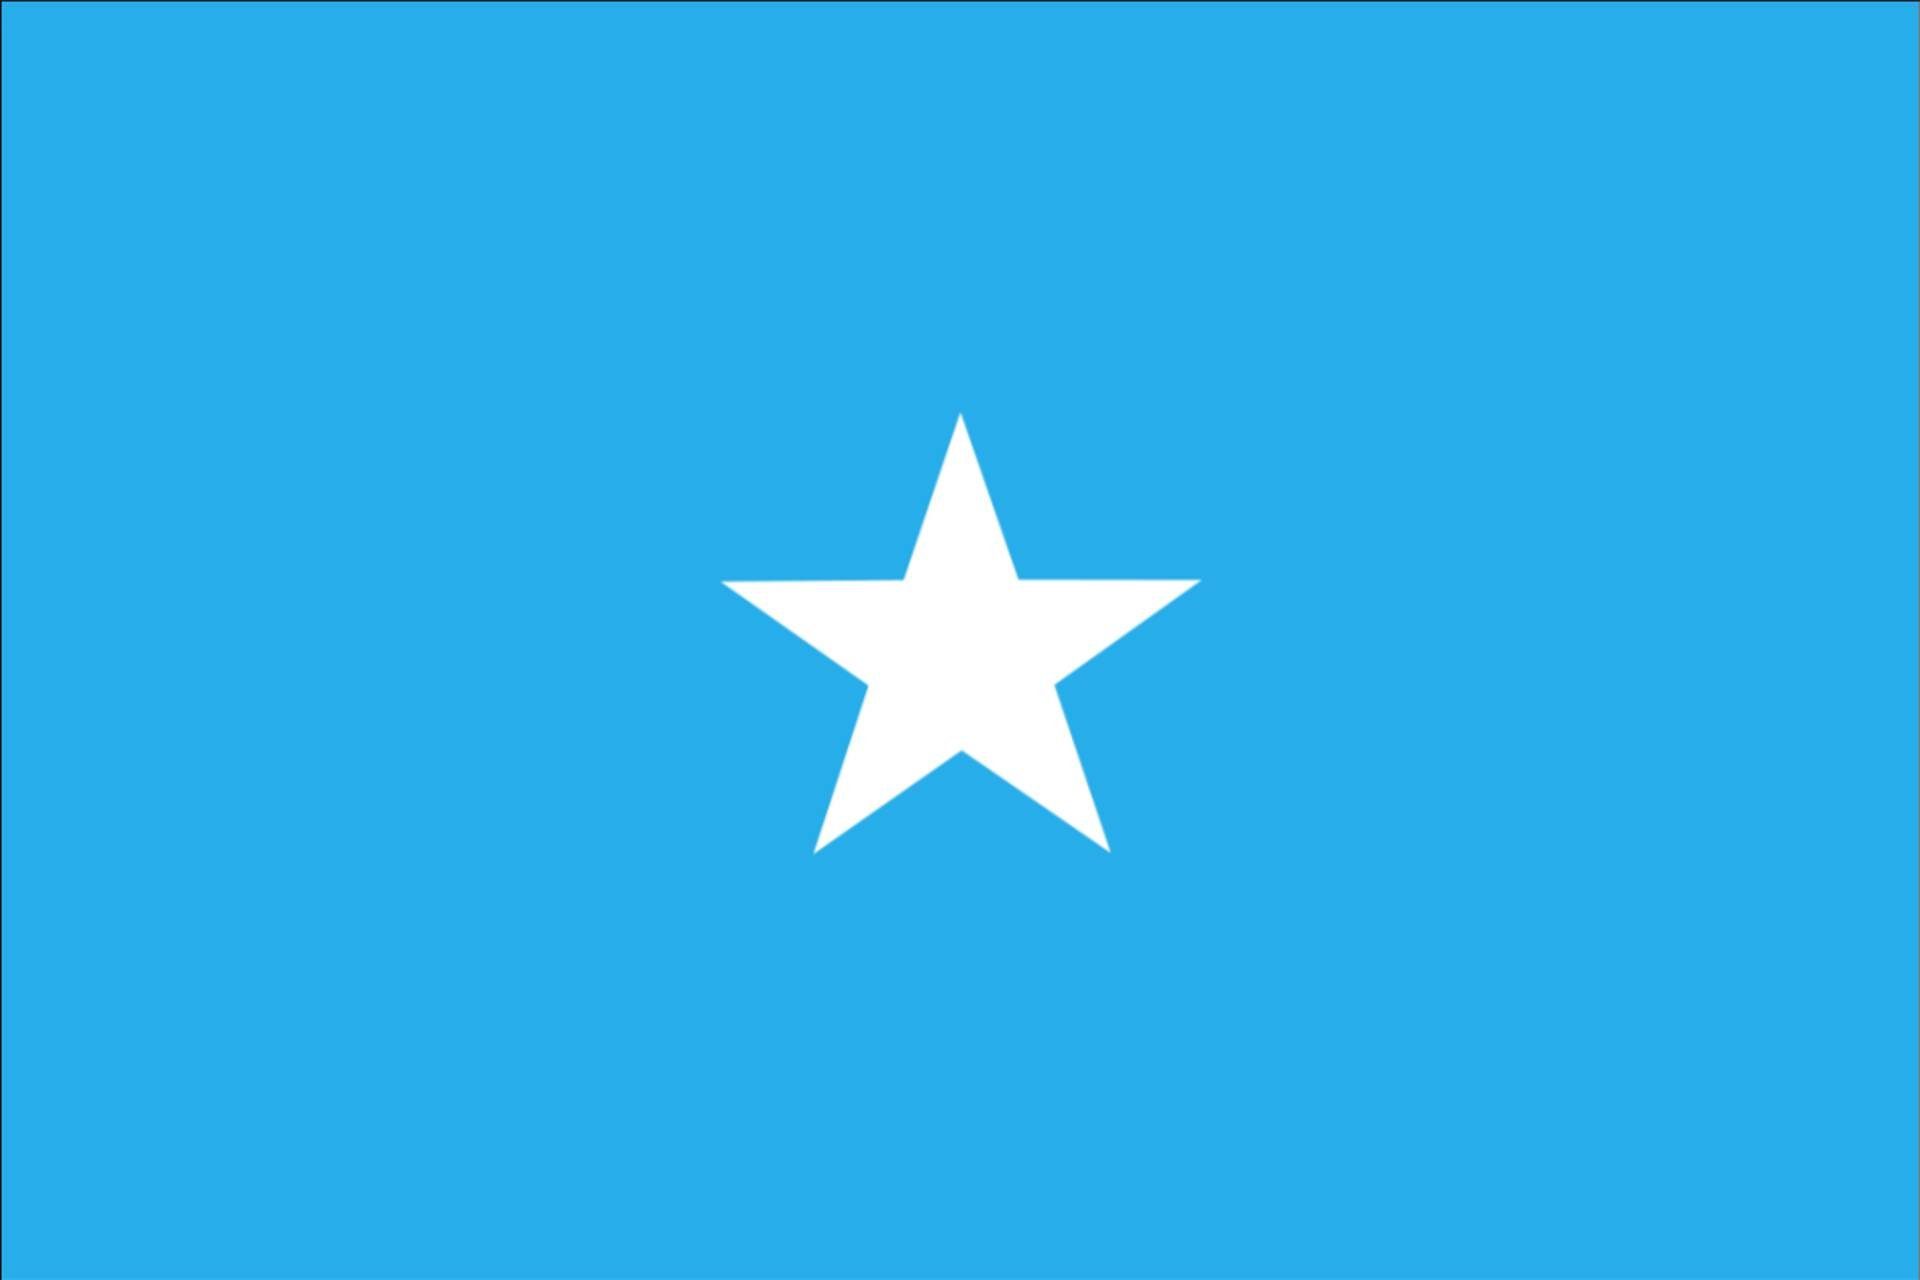 Flagge g/m² flaggenmeer 80 Somalia